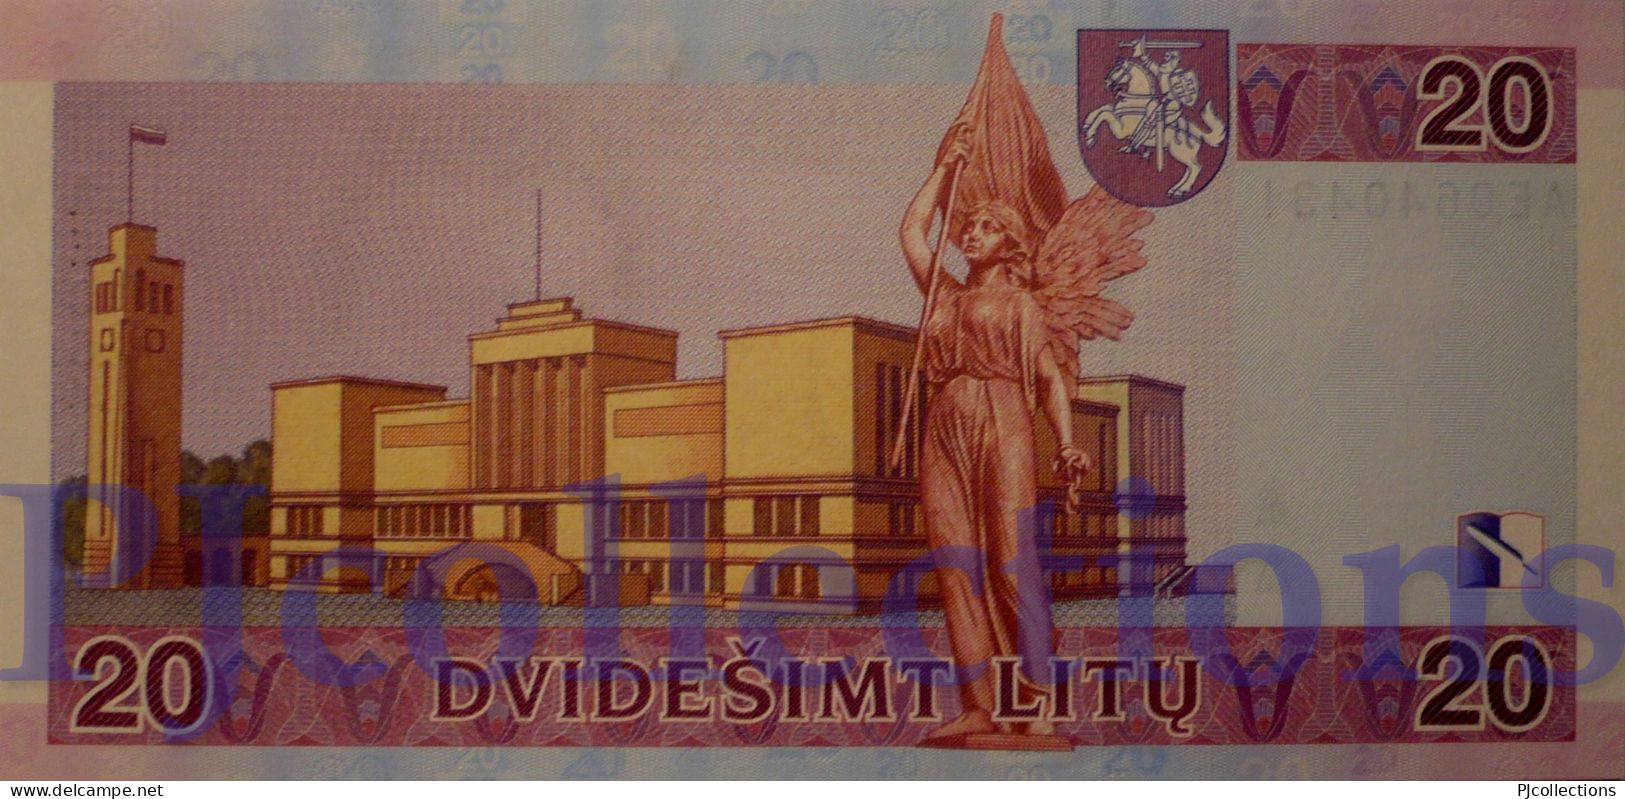 LITHUANIA 20 LITU 2001 PICK 66 UNC - Litouwen